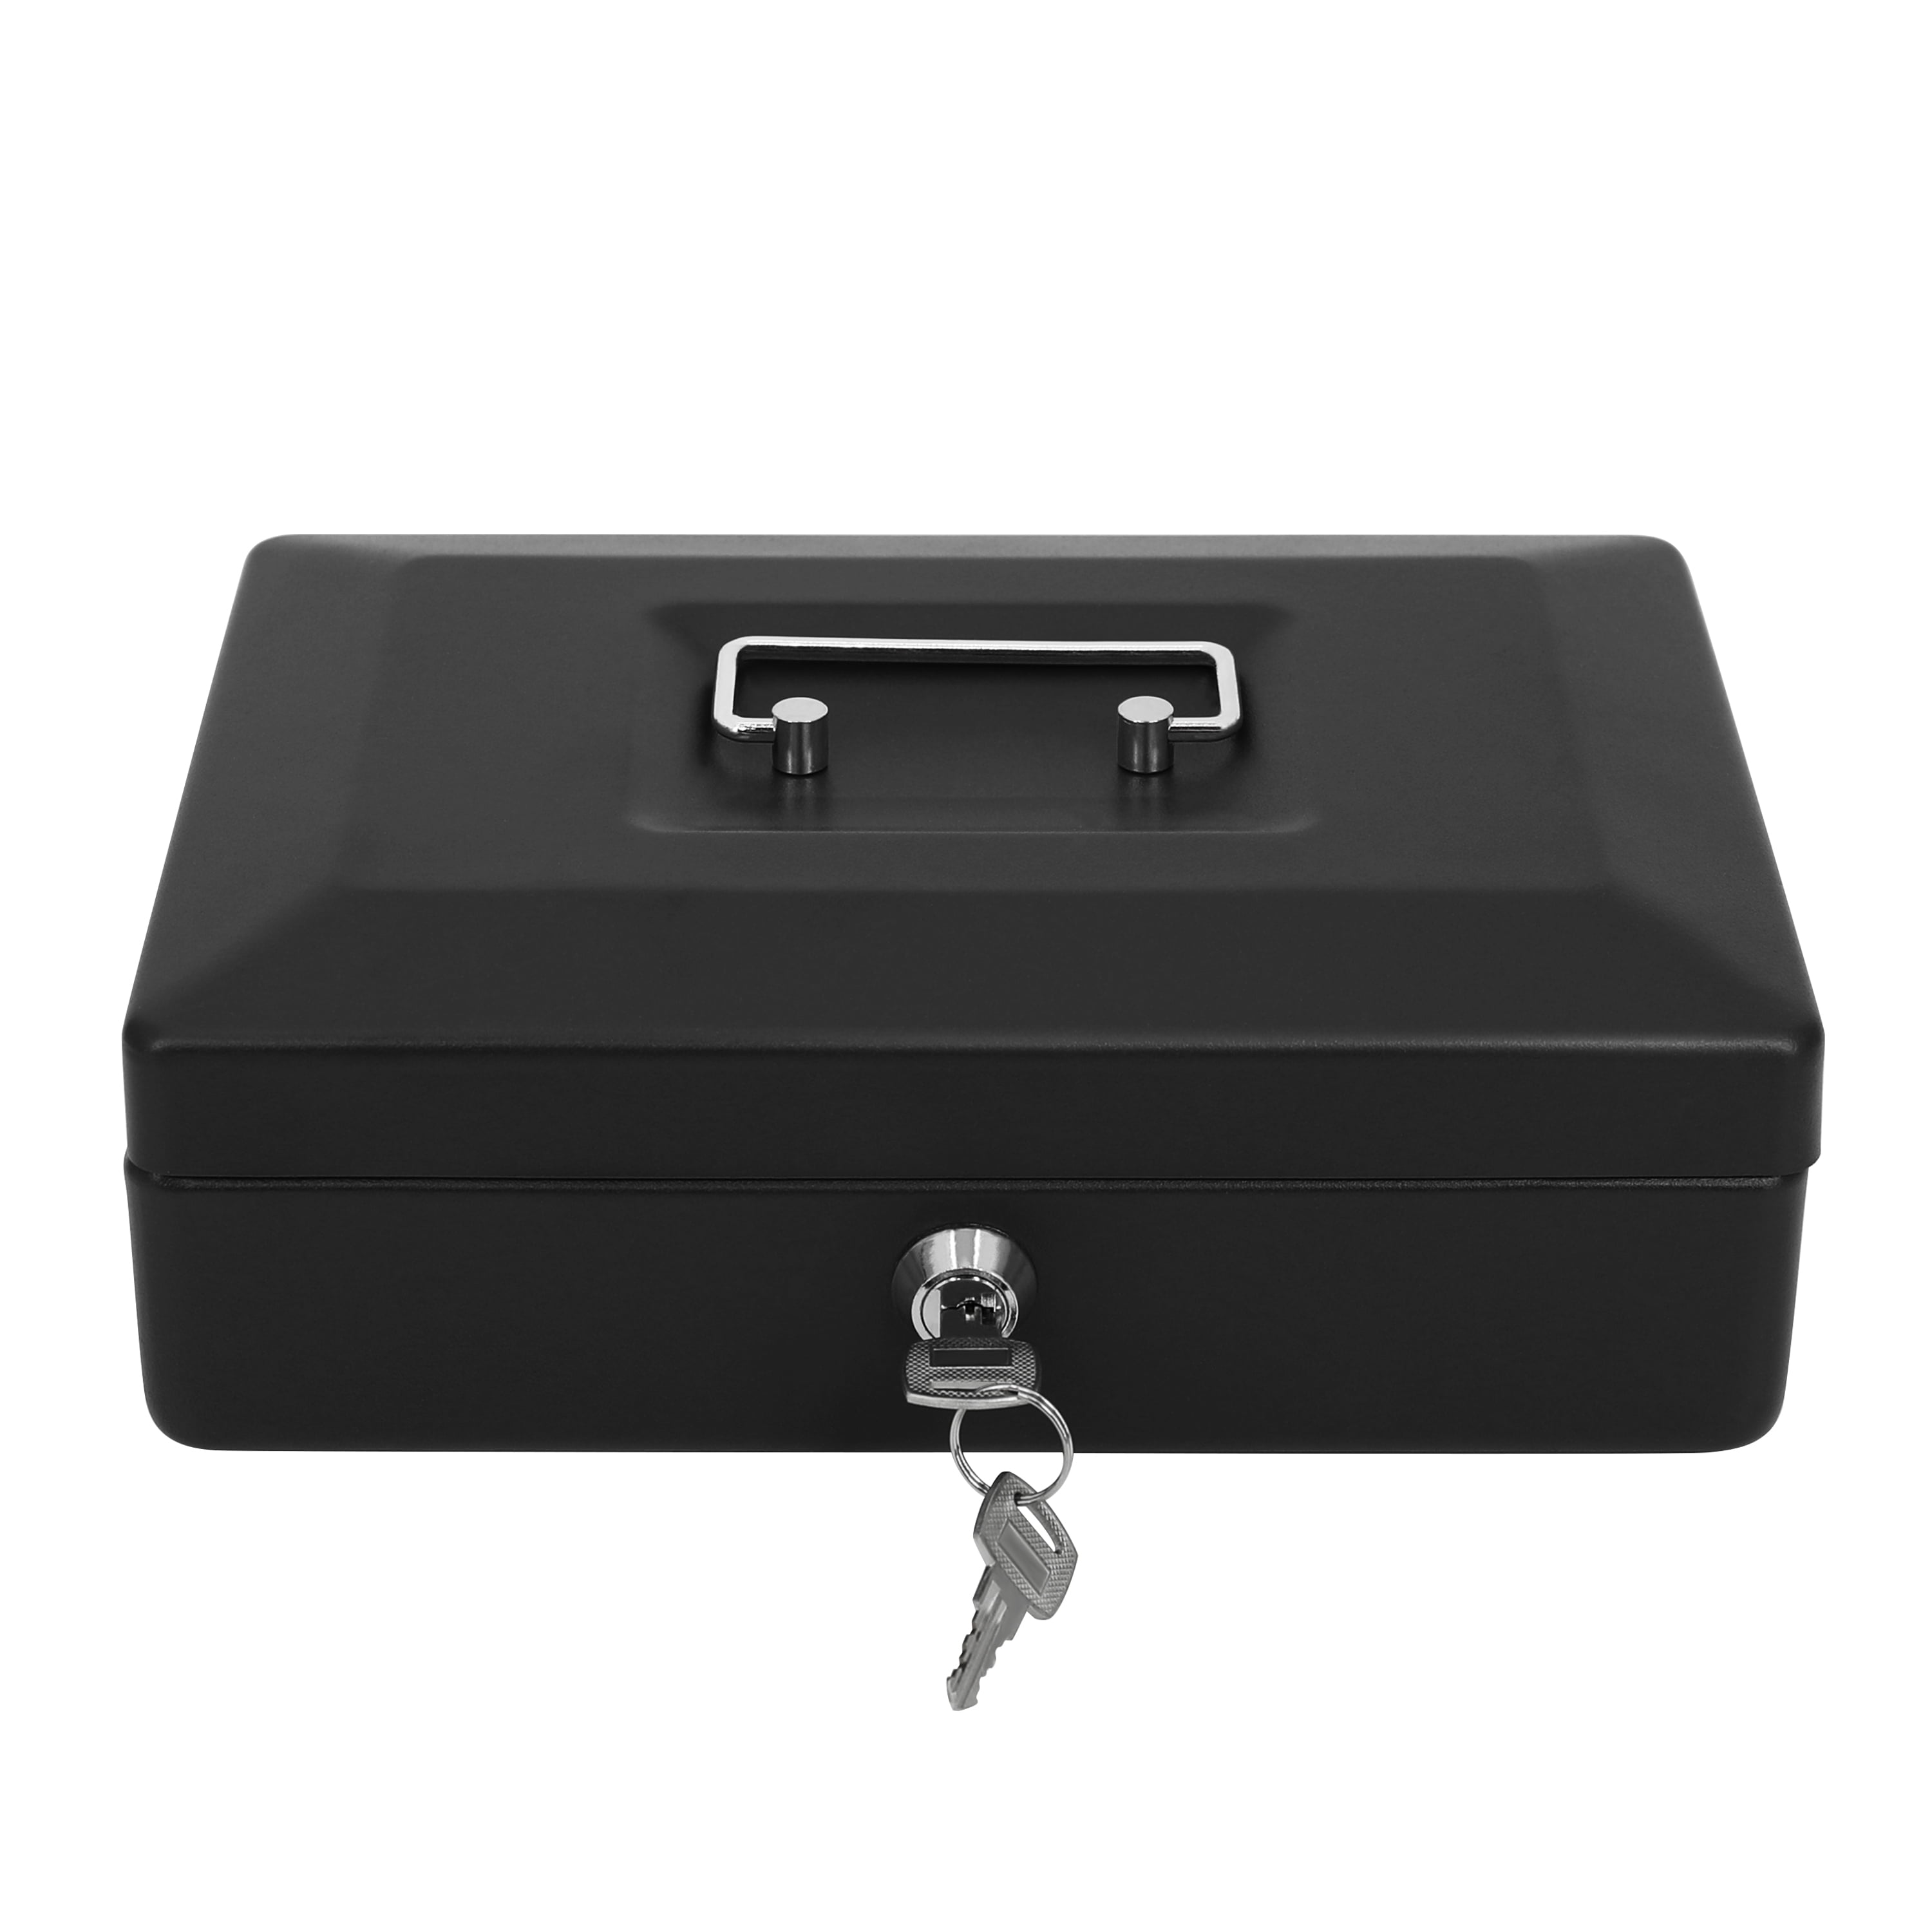 NEW 10" CASH BOX RED SAFE BANK DEPOSIT SECURITY STEEL METAL CASH BOX MONEY 